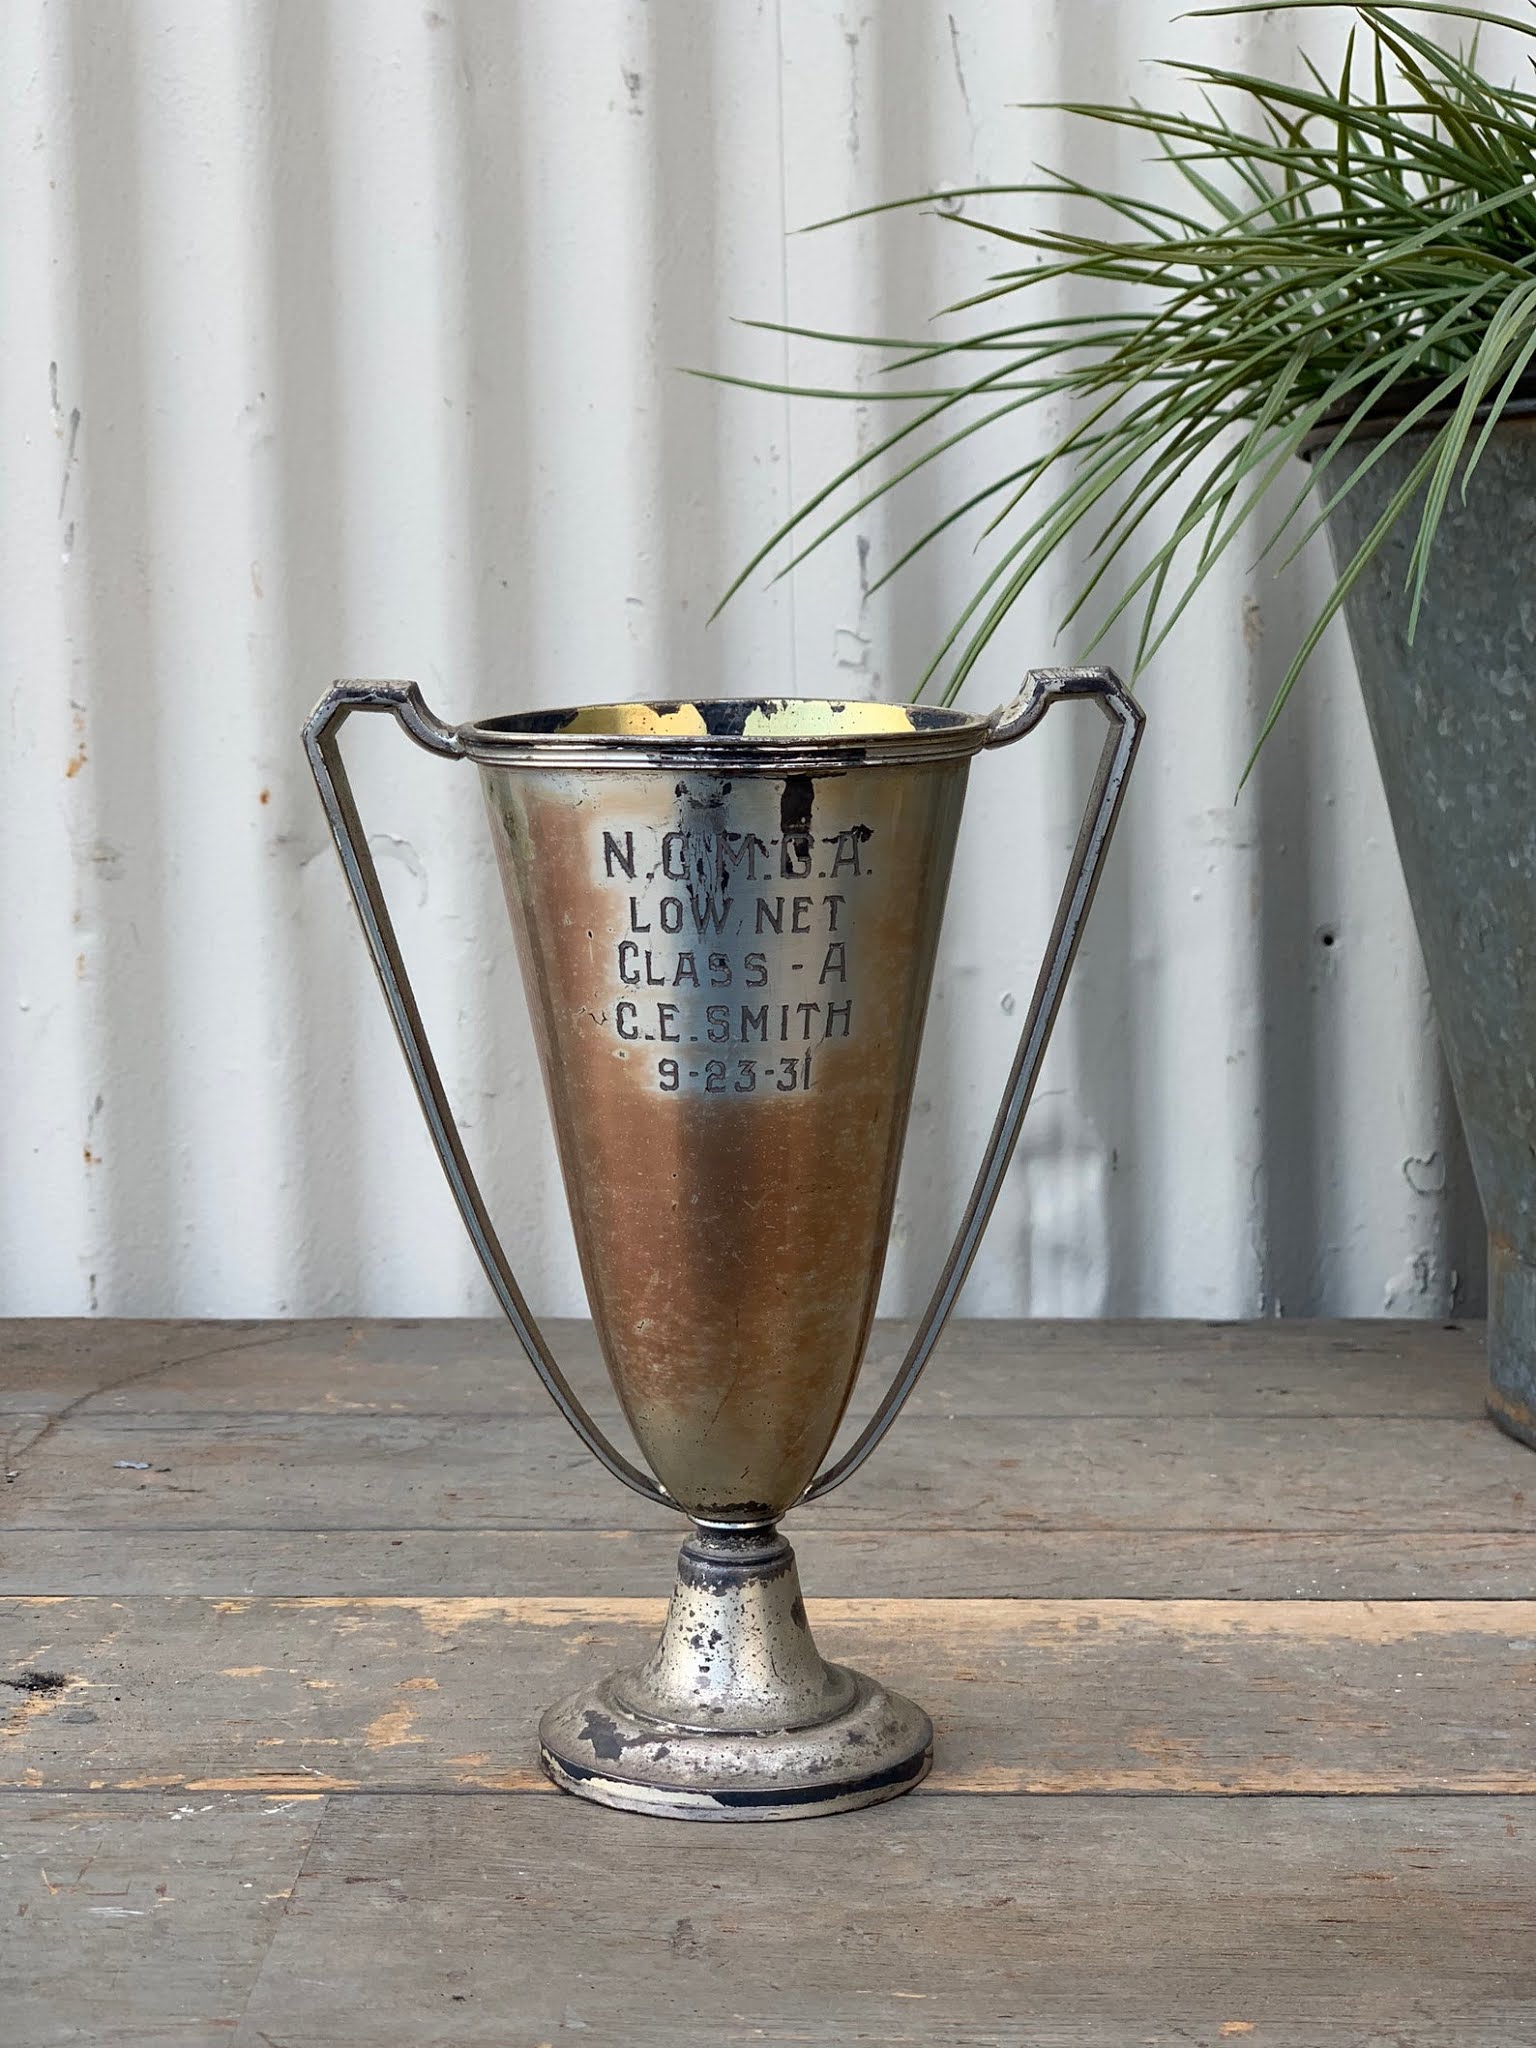 A vintage 1930 loving cup trophy